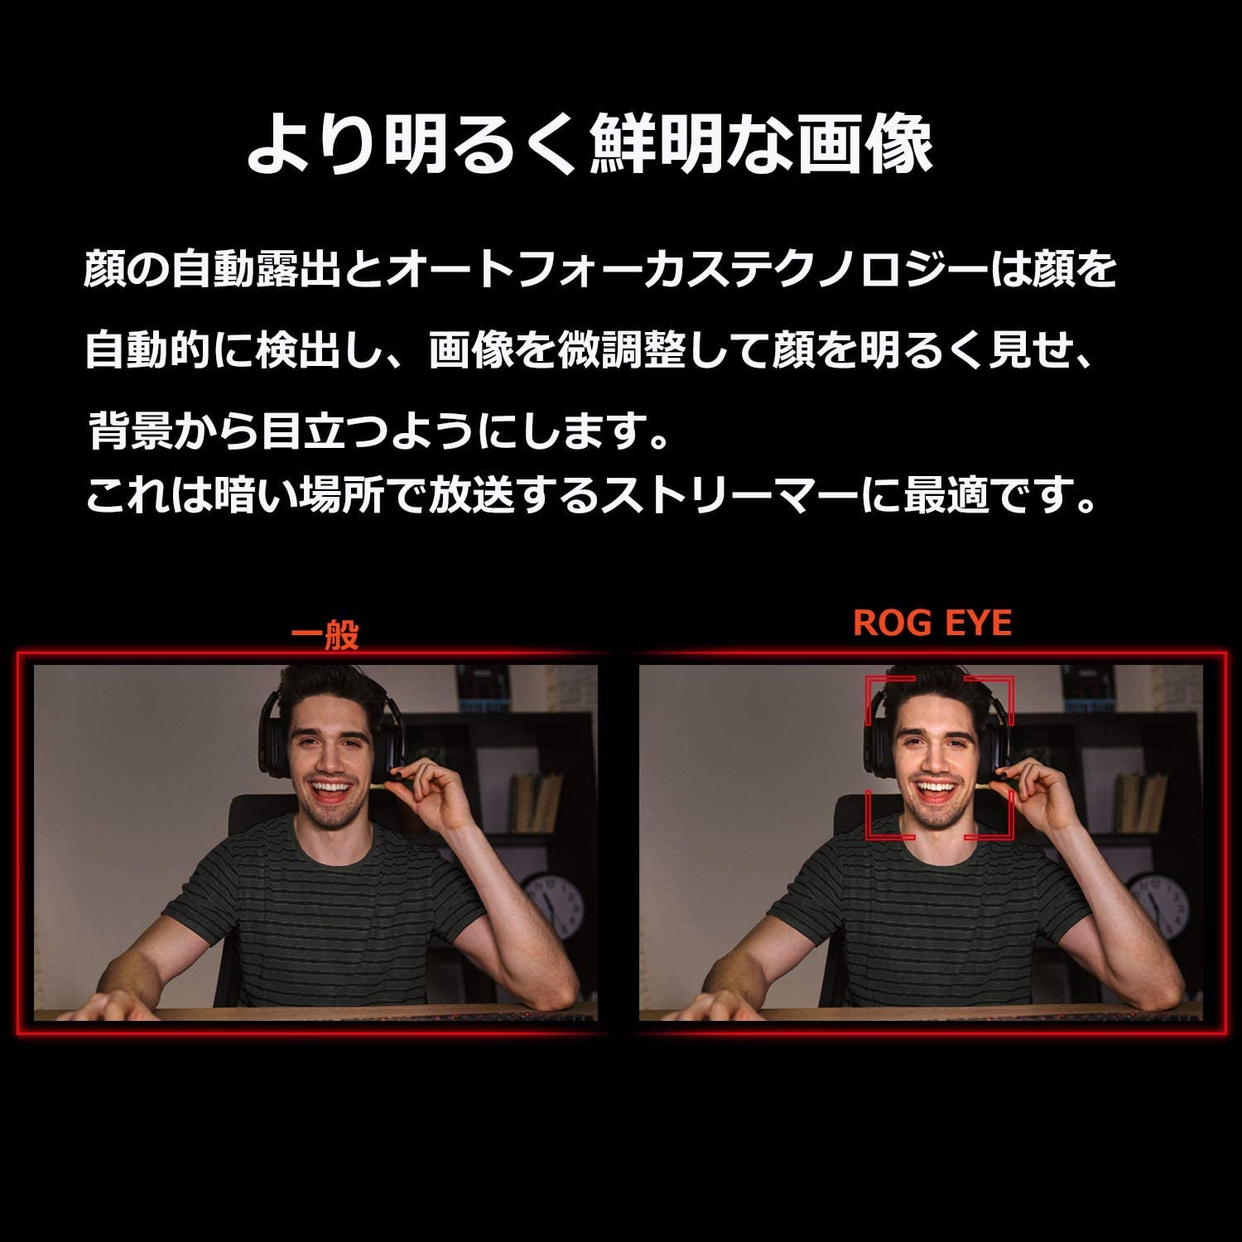 ASUS(エイスース) ROG Eyeの商品画像サムネ5 